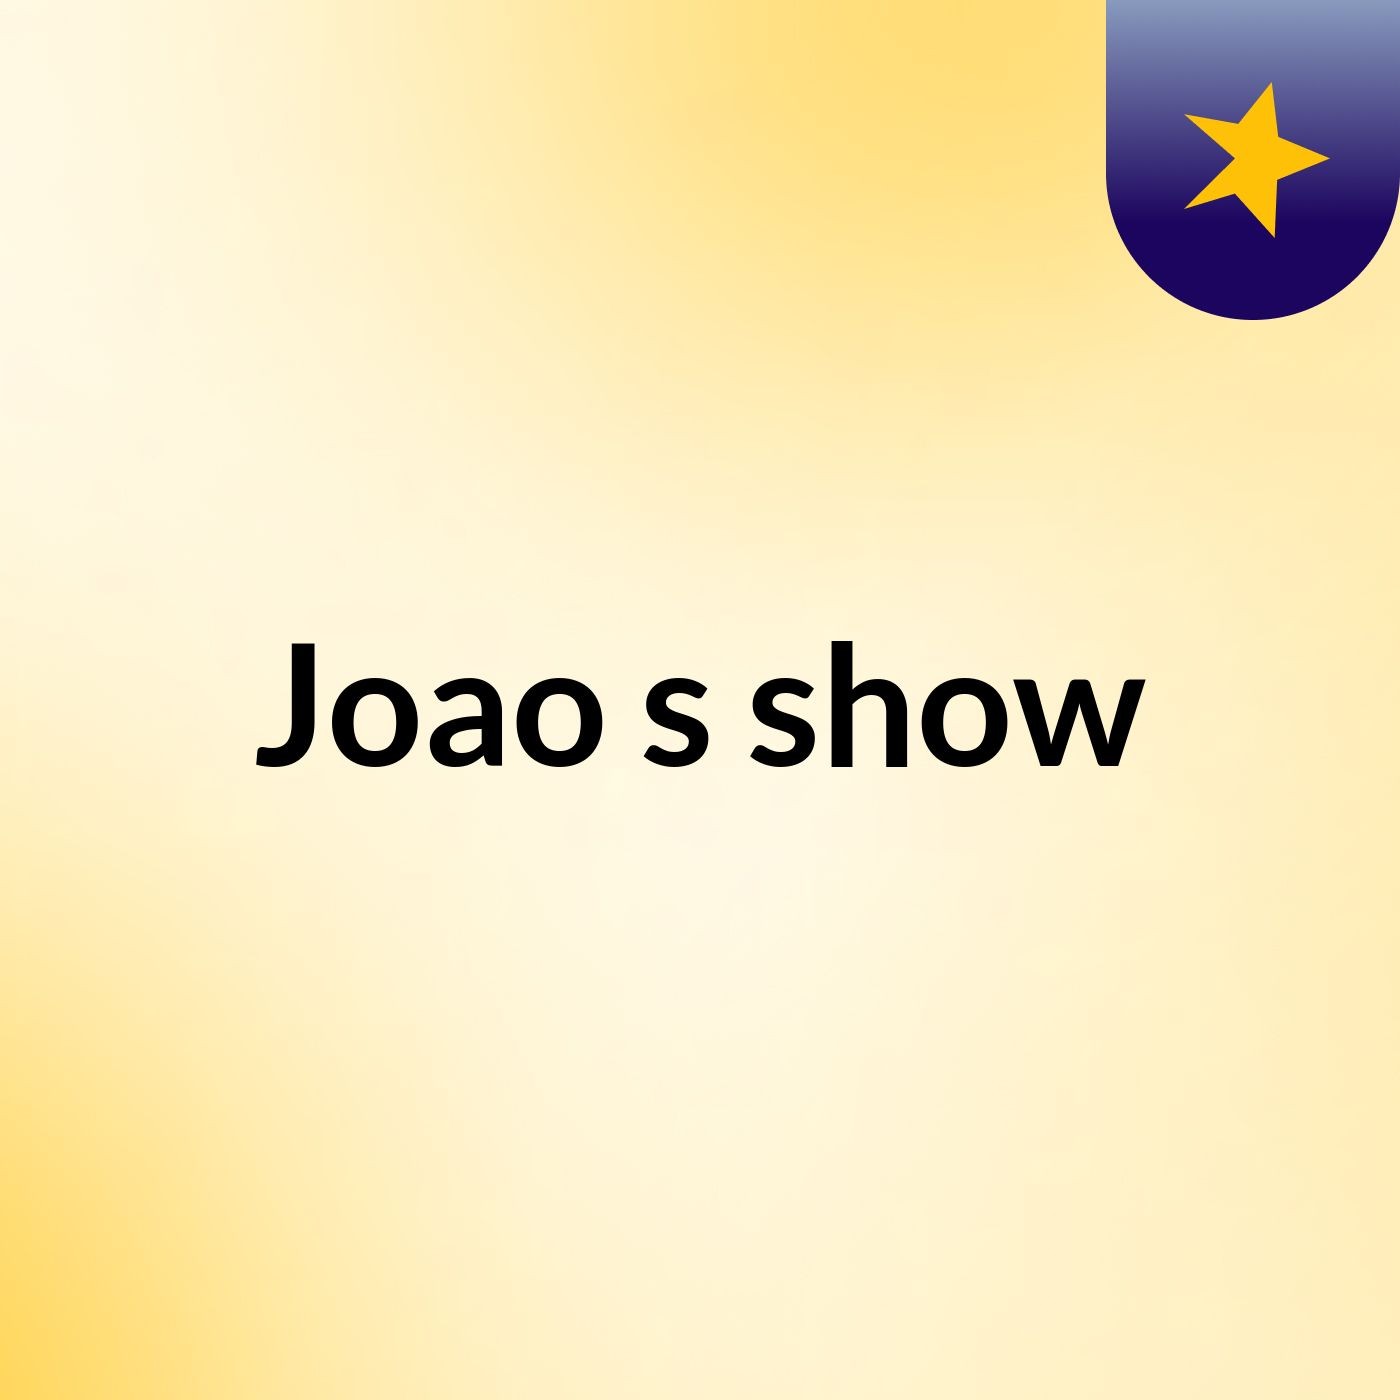 Joao's show